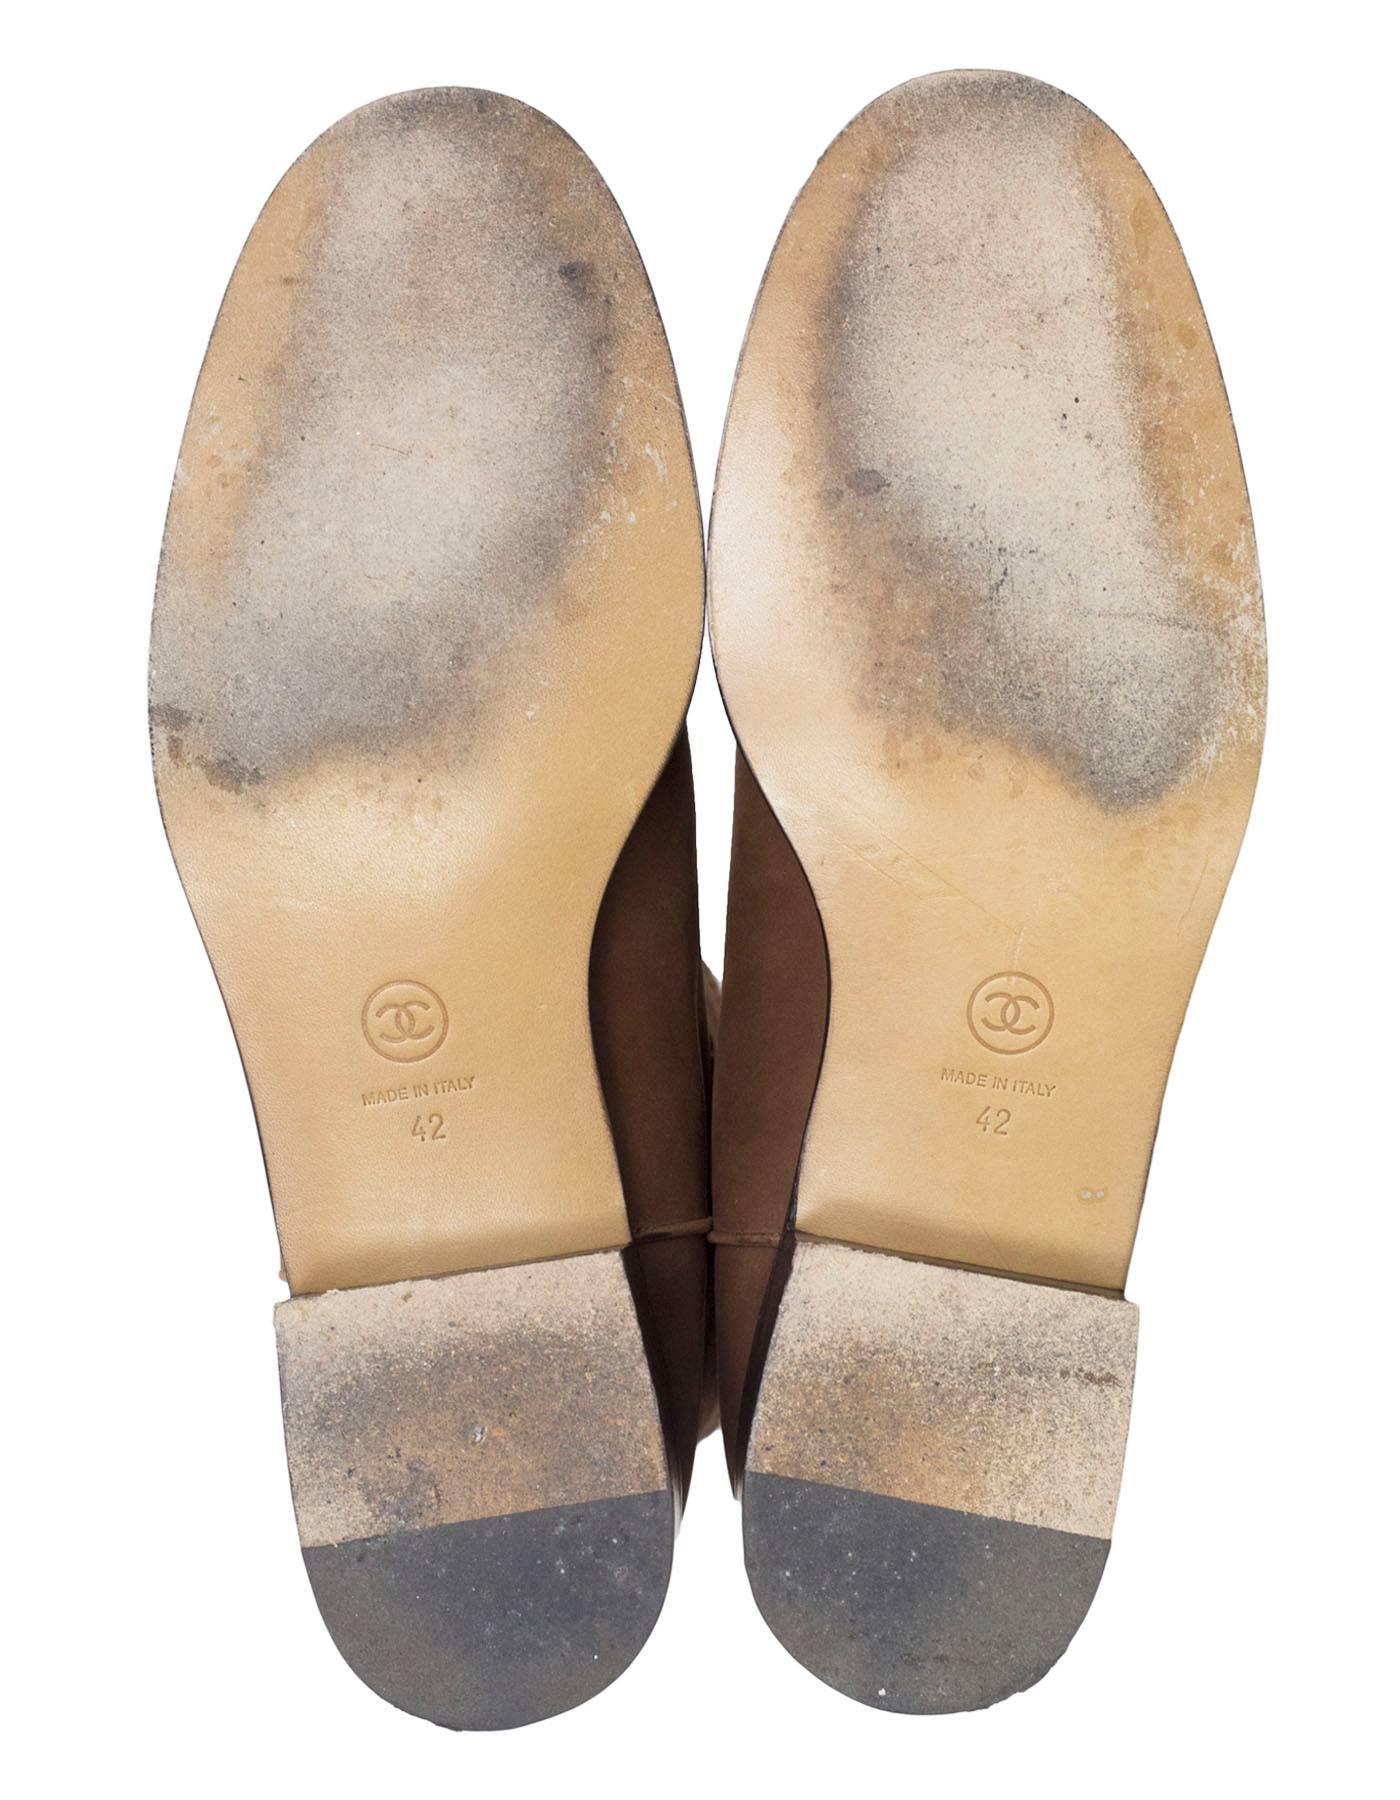 Chanel Tan Leather Short Ascot Boots sz 42 2